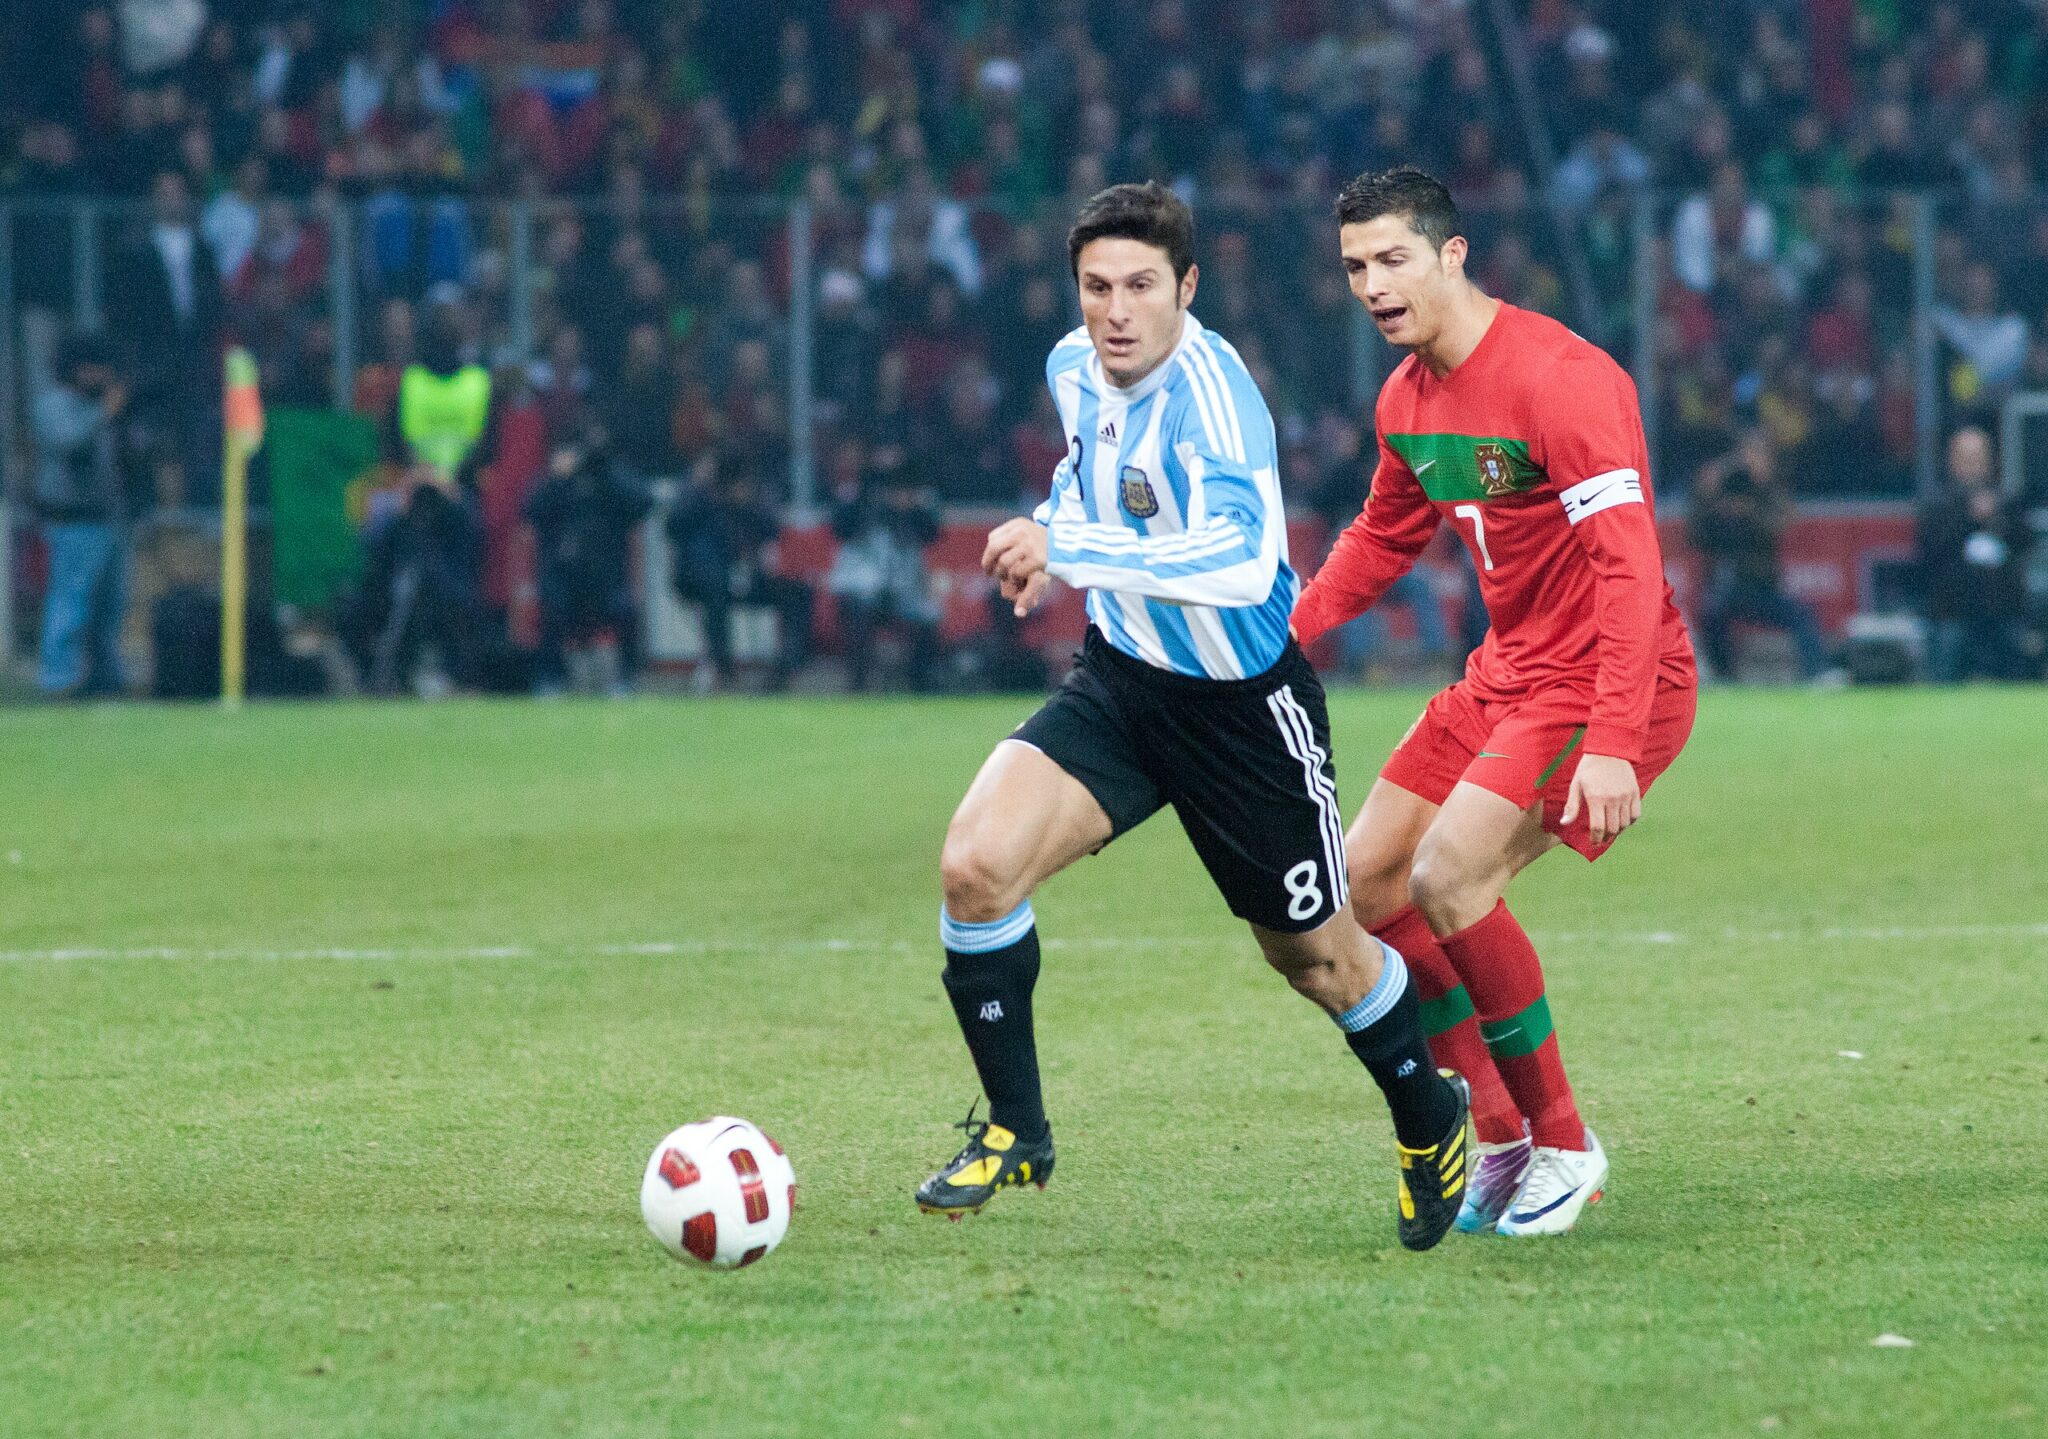 Javier Zanetti et Cristiano Ronaldo jouant au football sur le terrain